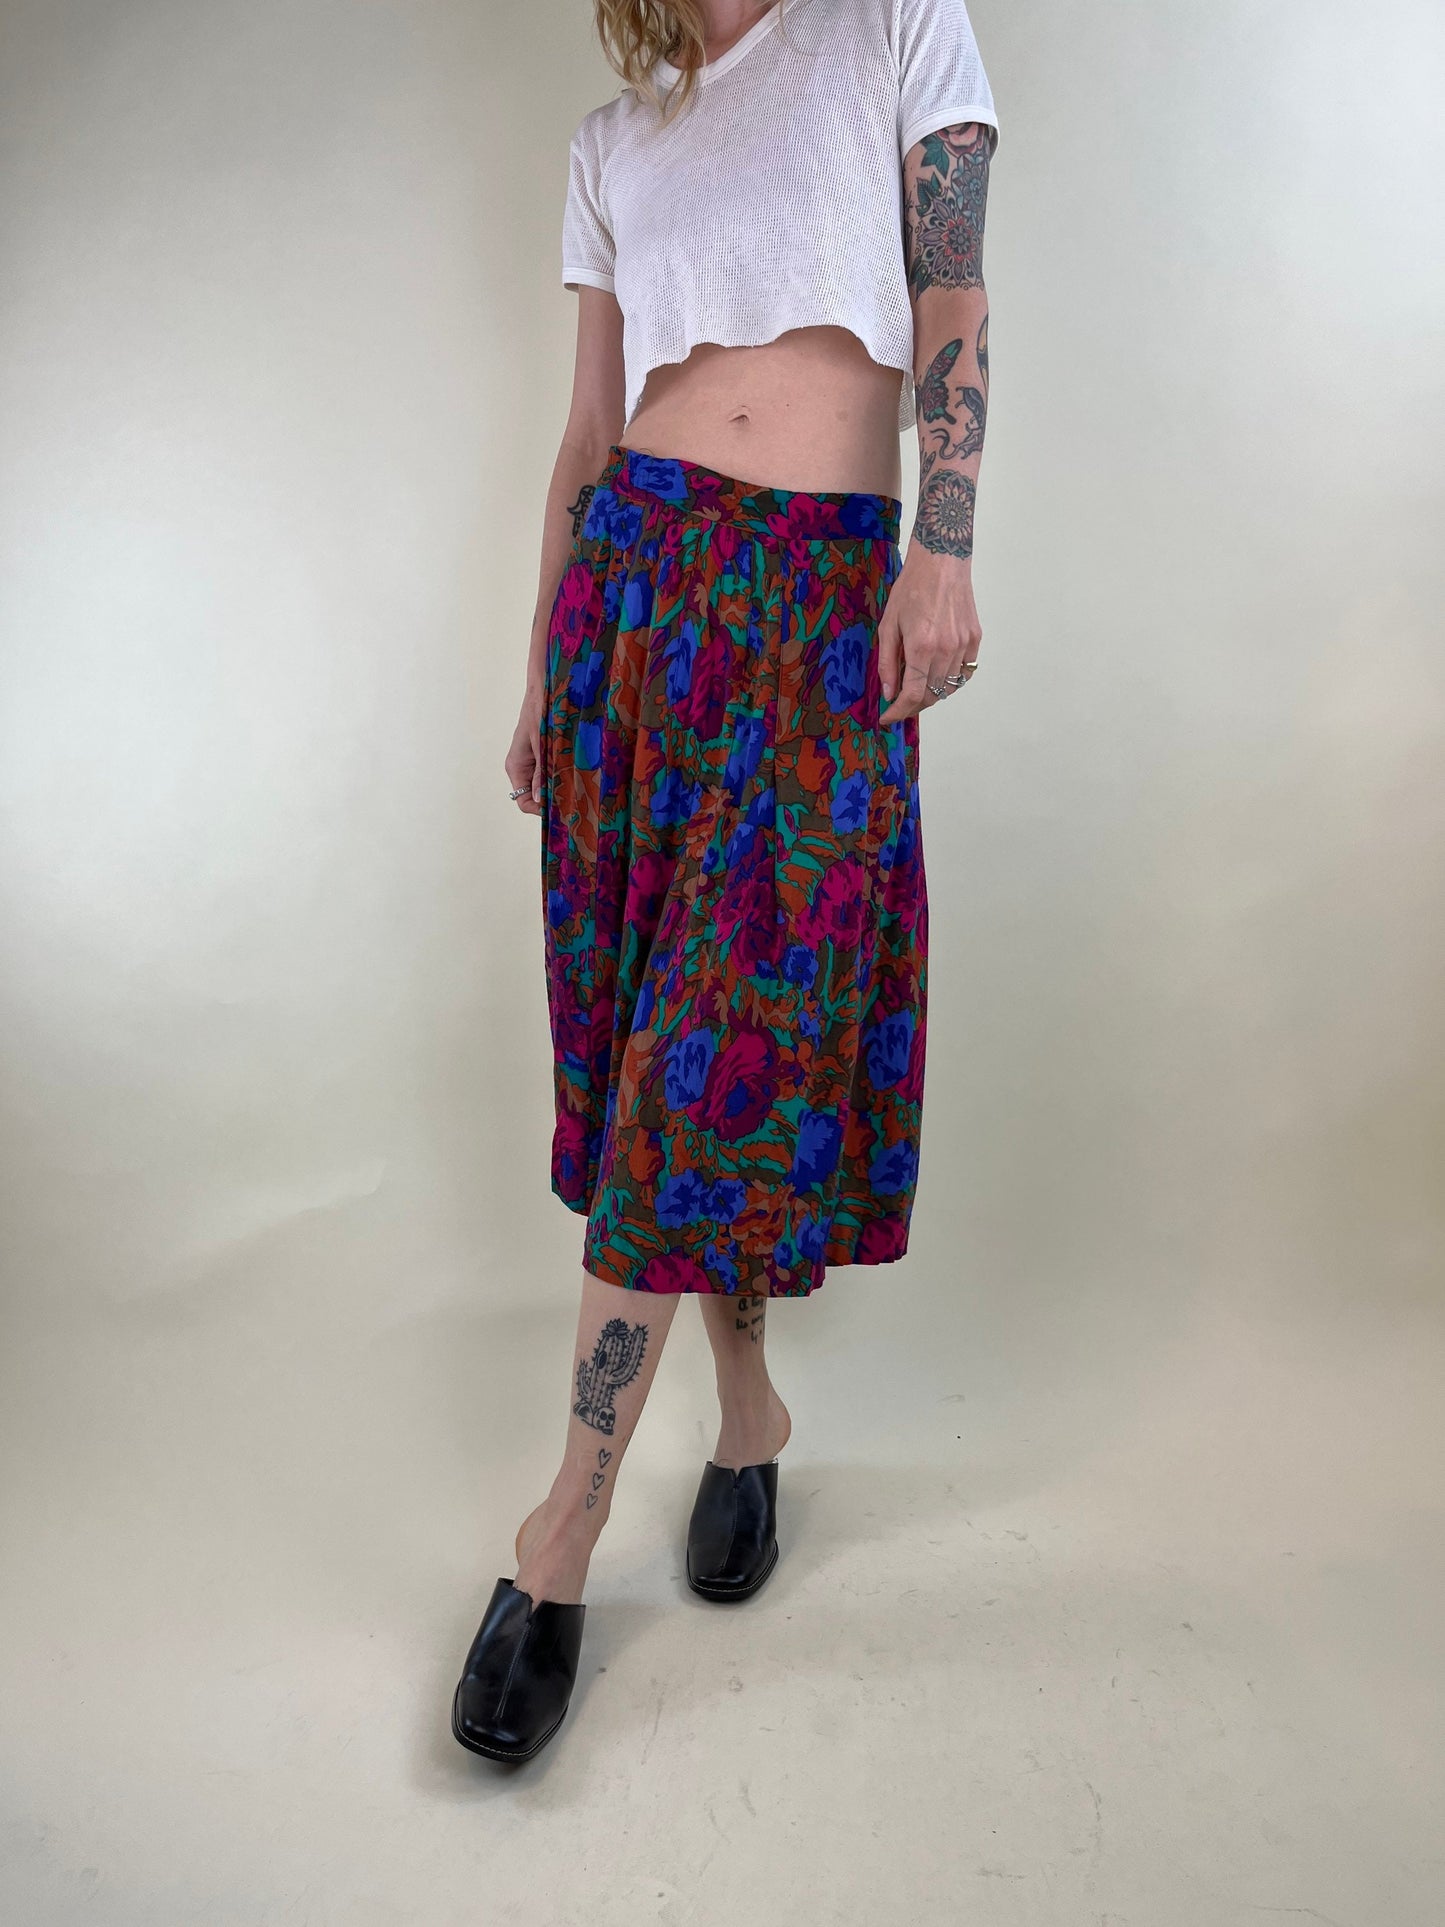 90s Jewel Tone Floral Print Rayon Skirt / Medium